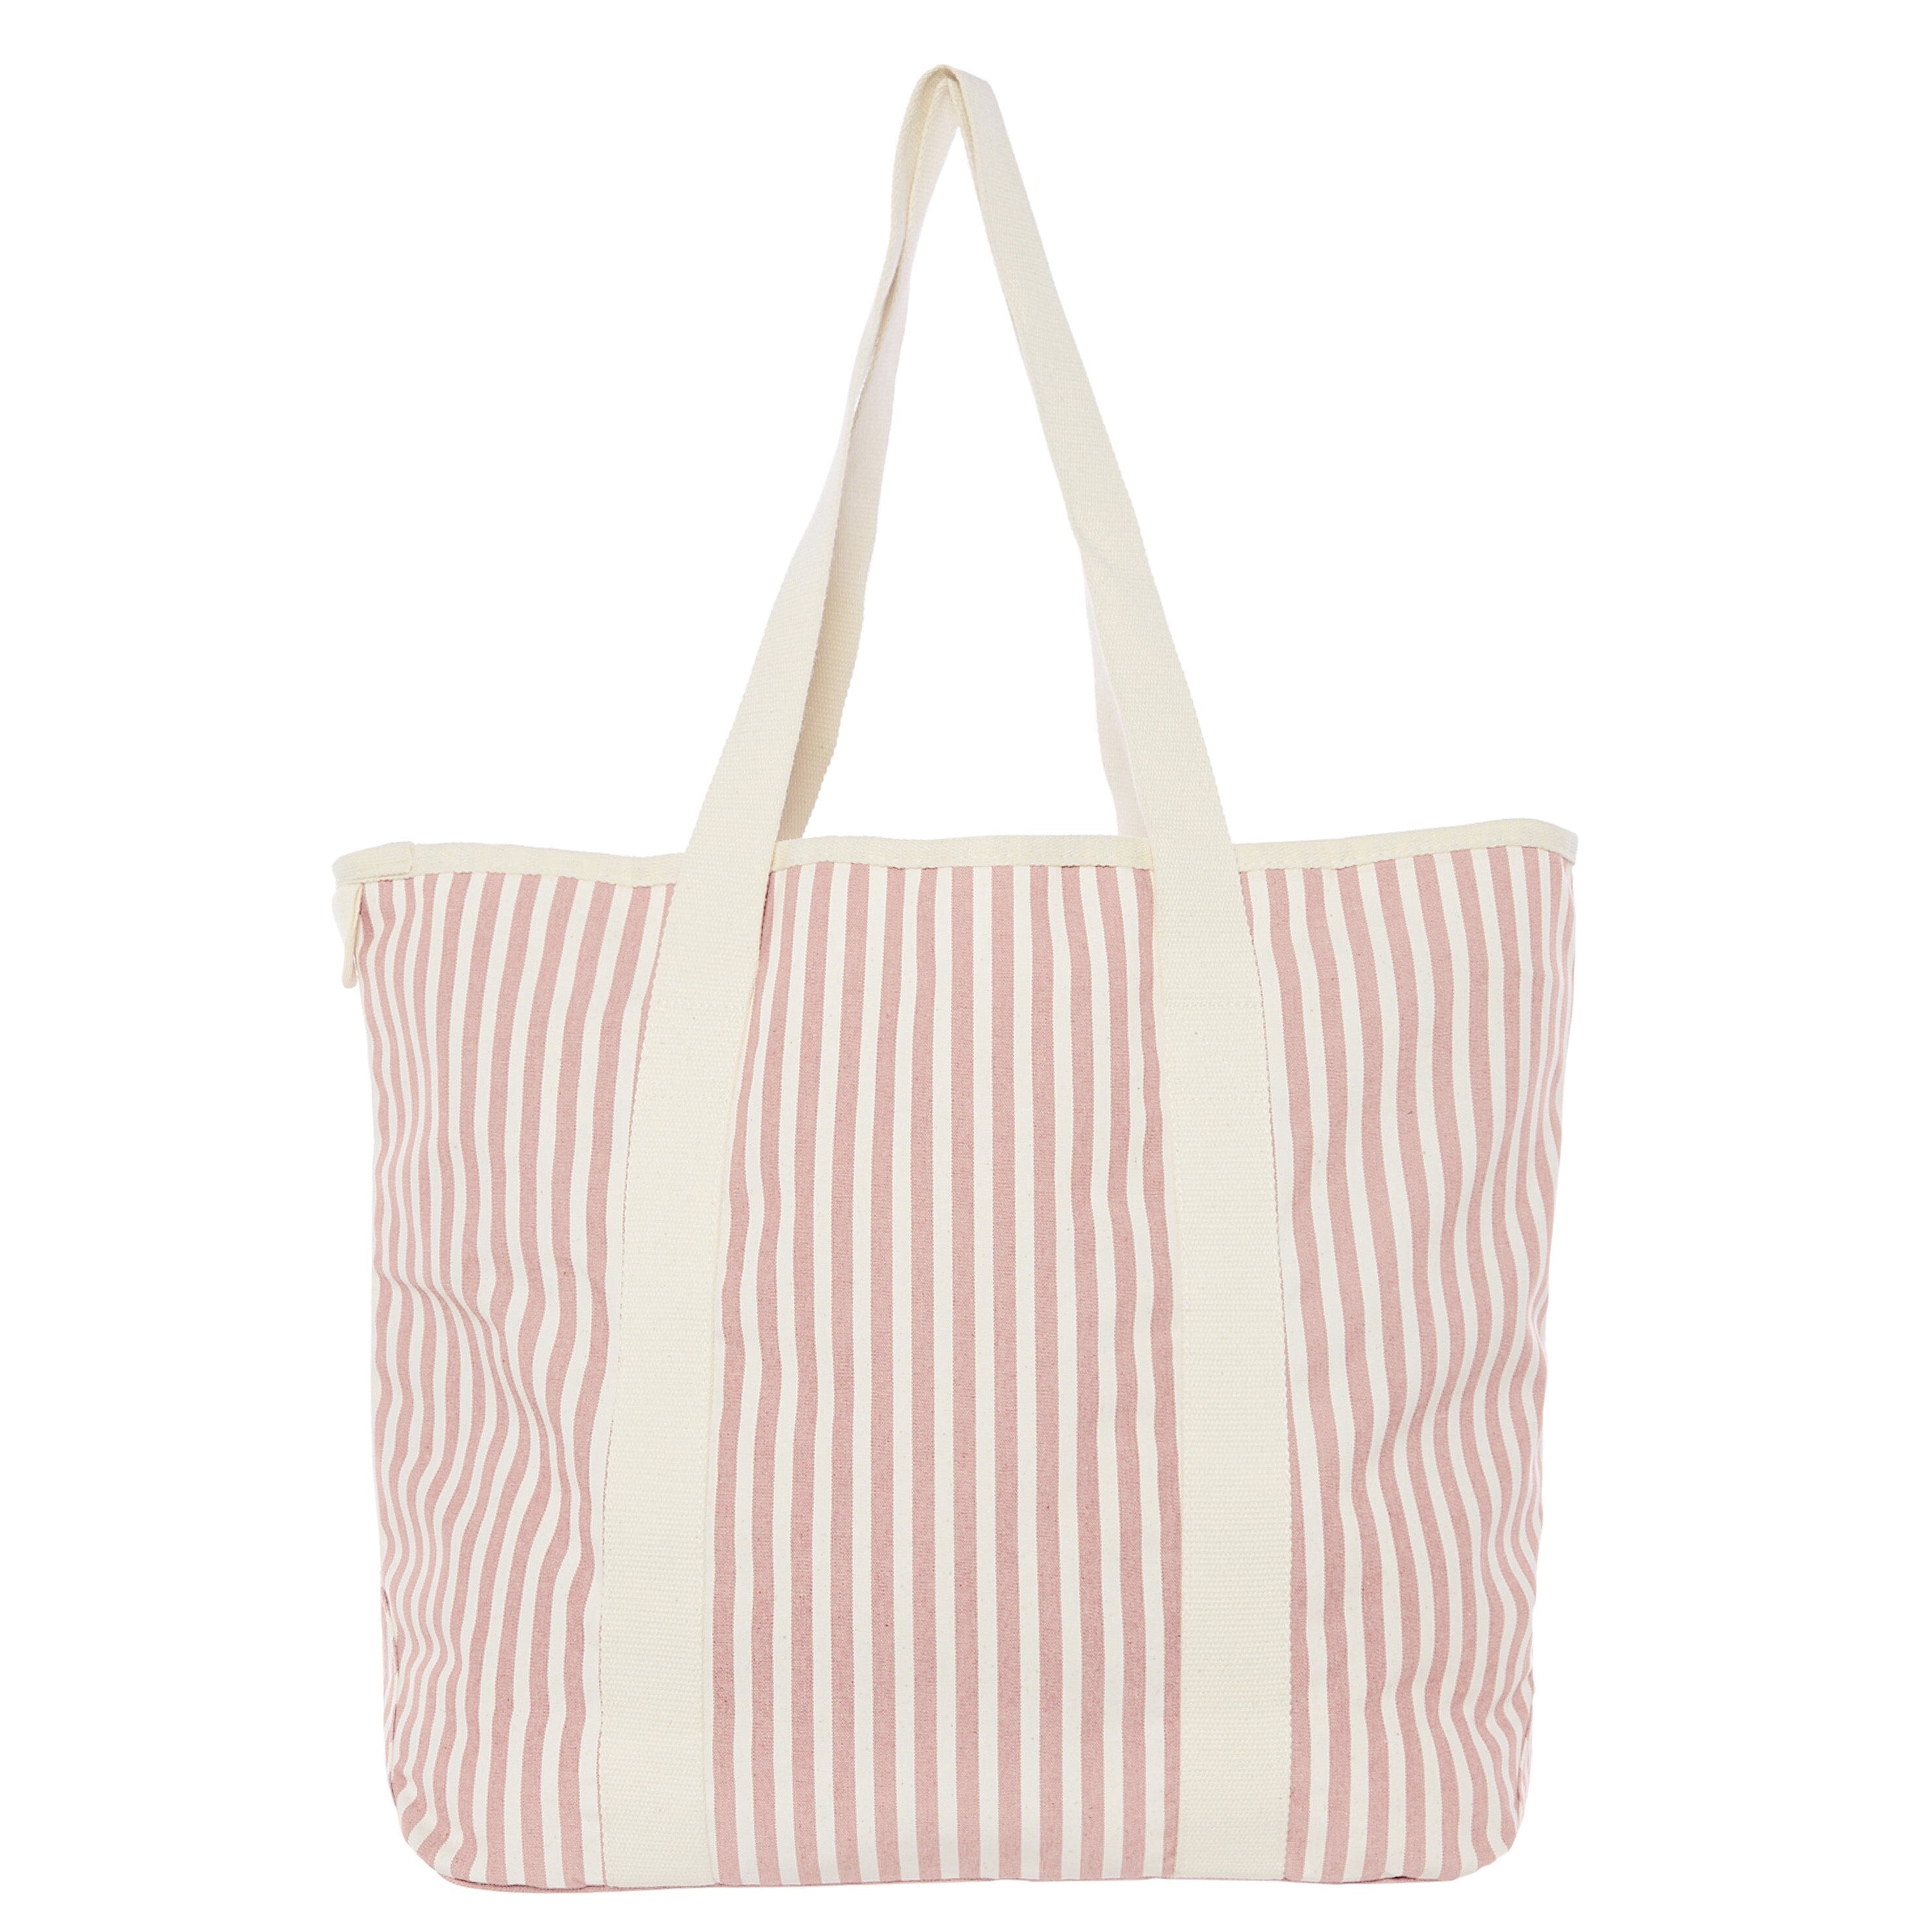 The Beach Bag - Lauren's Pink Stripe Beach Bag Business & Pleasure Co 